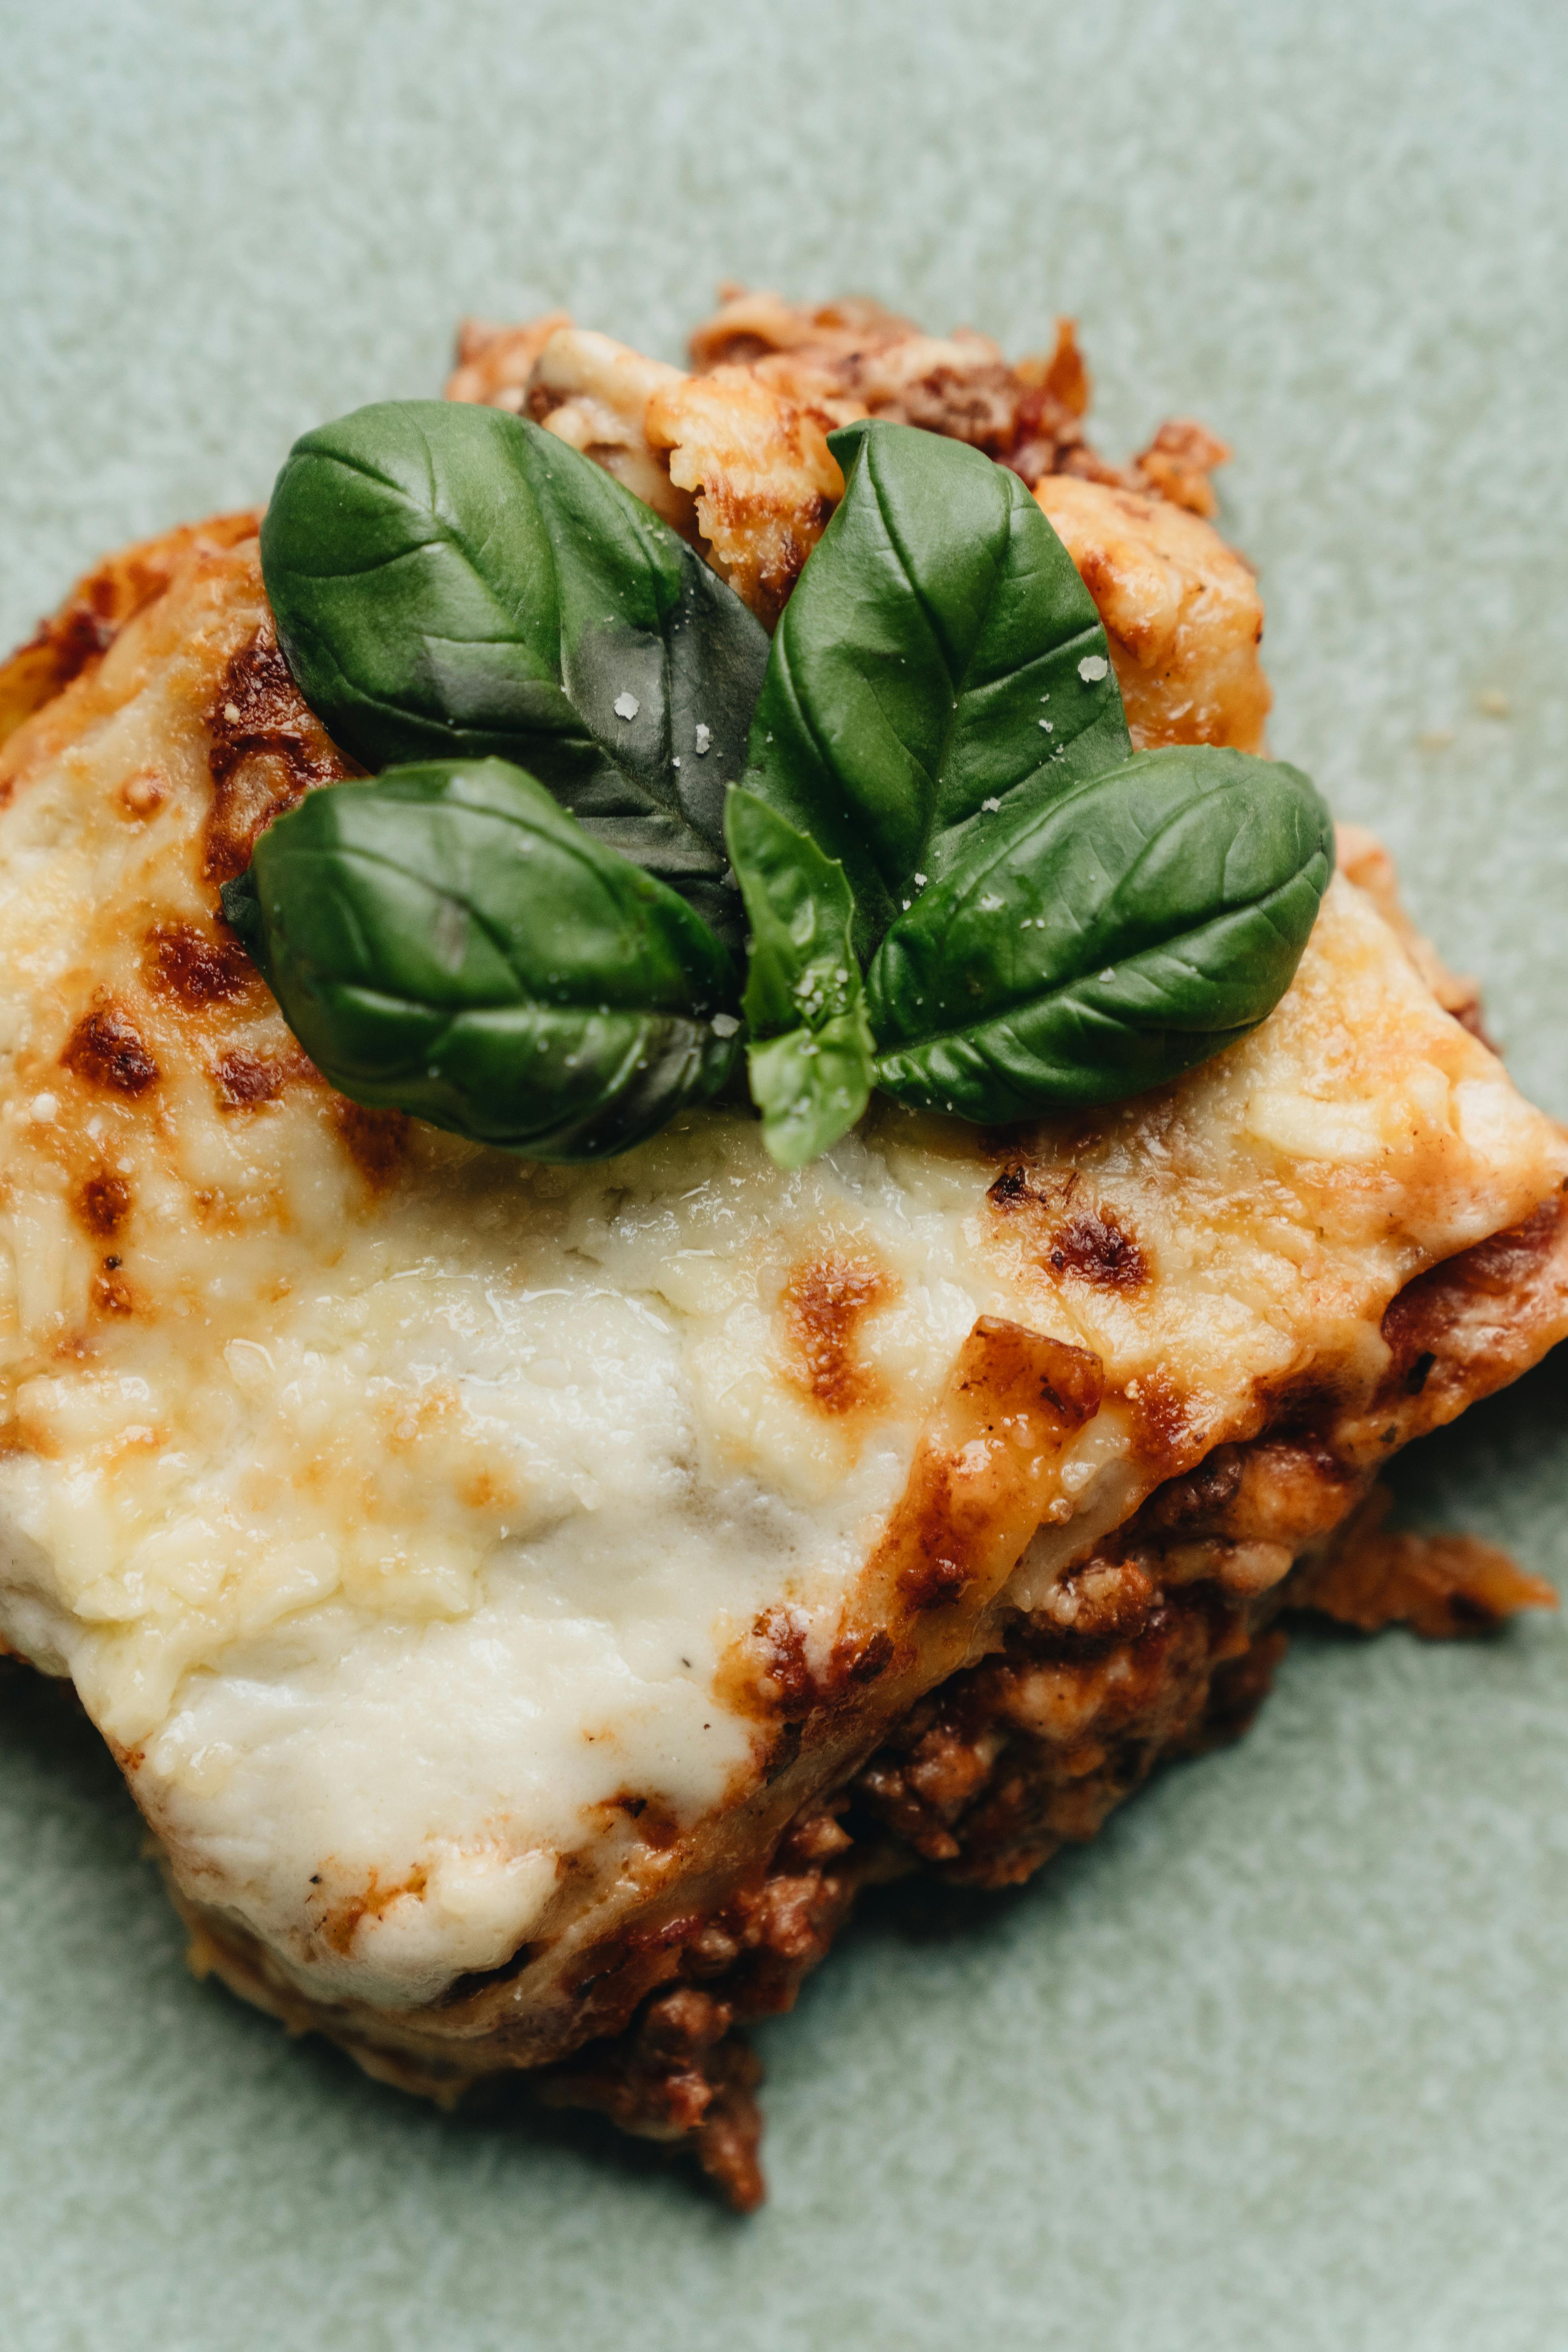 A slice of lasagna garnished with basil | Source: Pexels